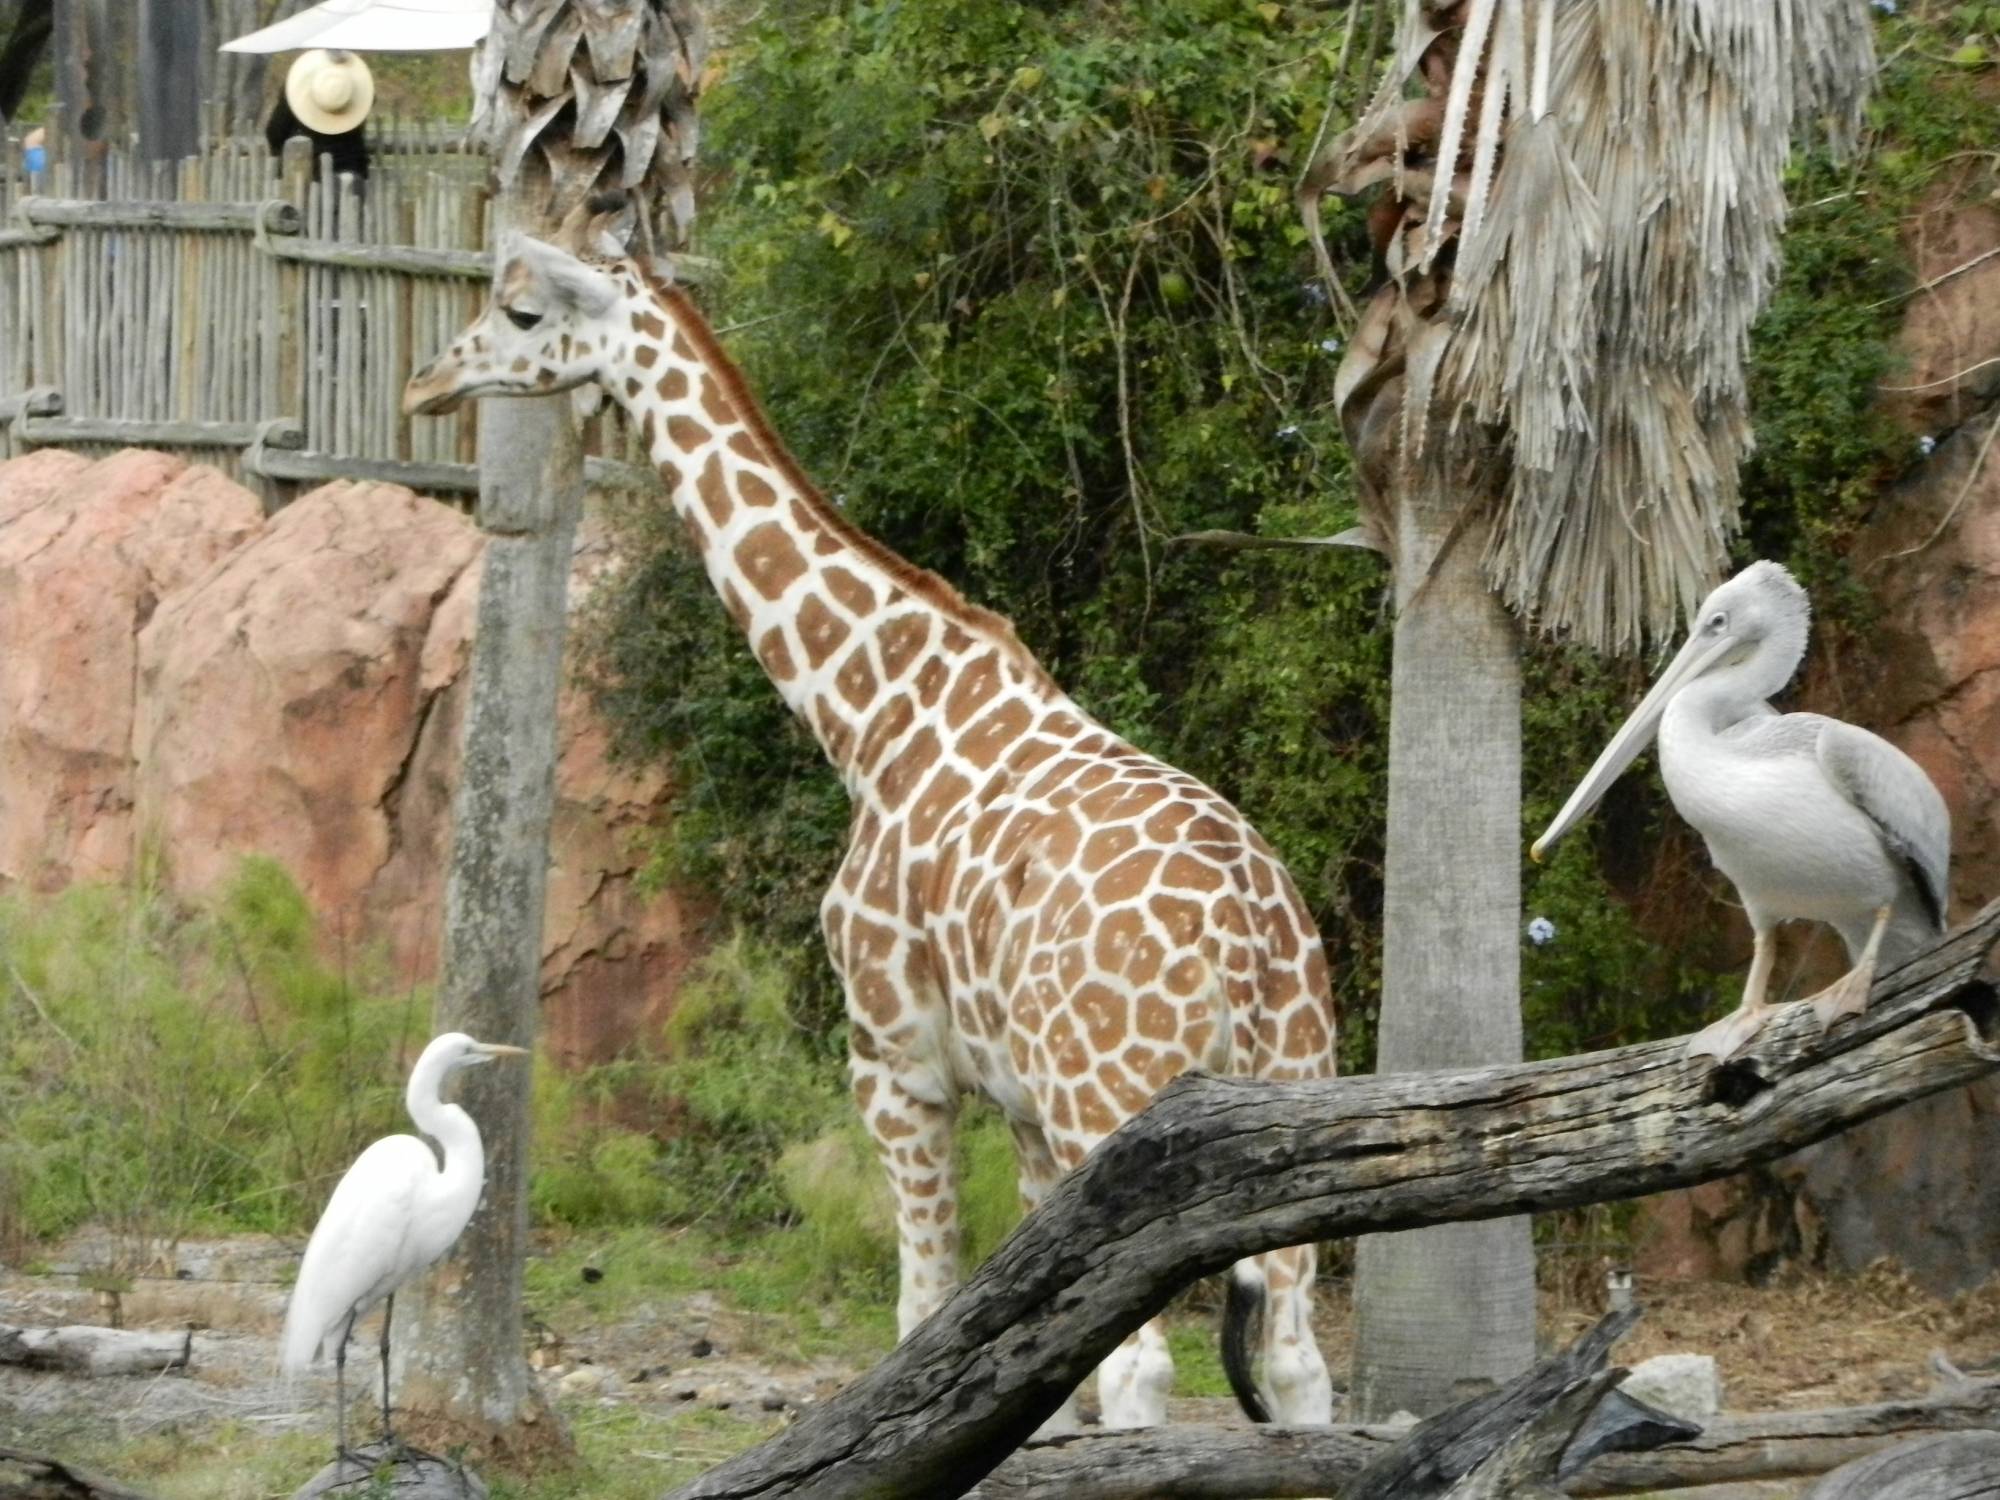 Giraffe deciding an escape was not possible